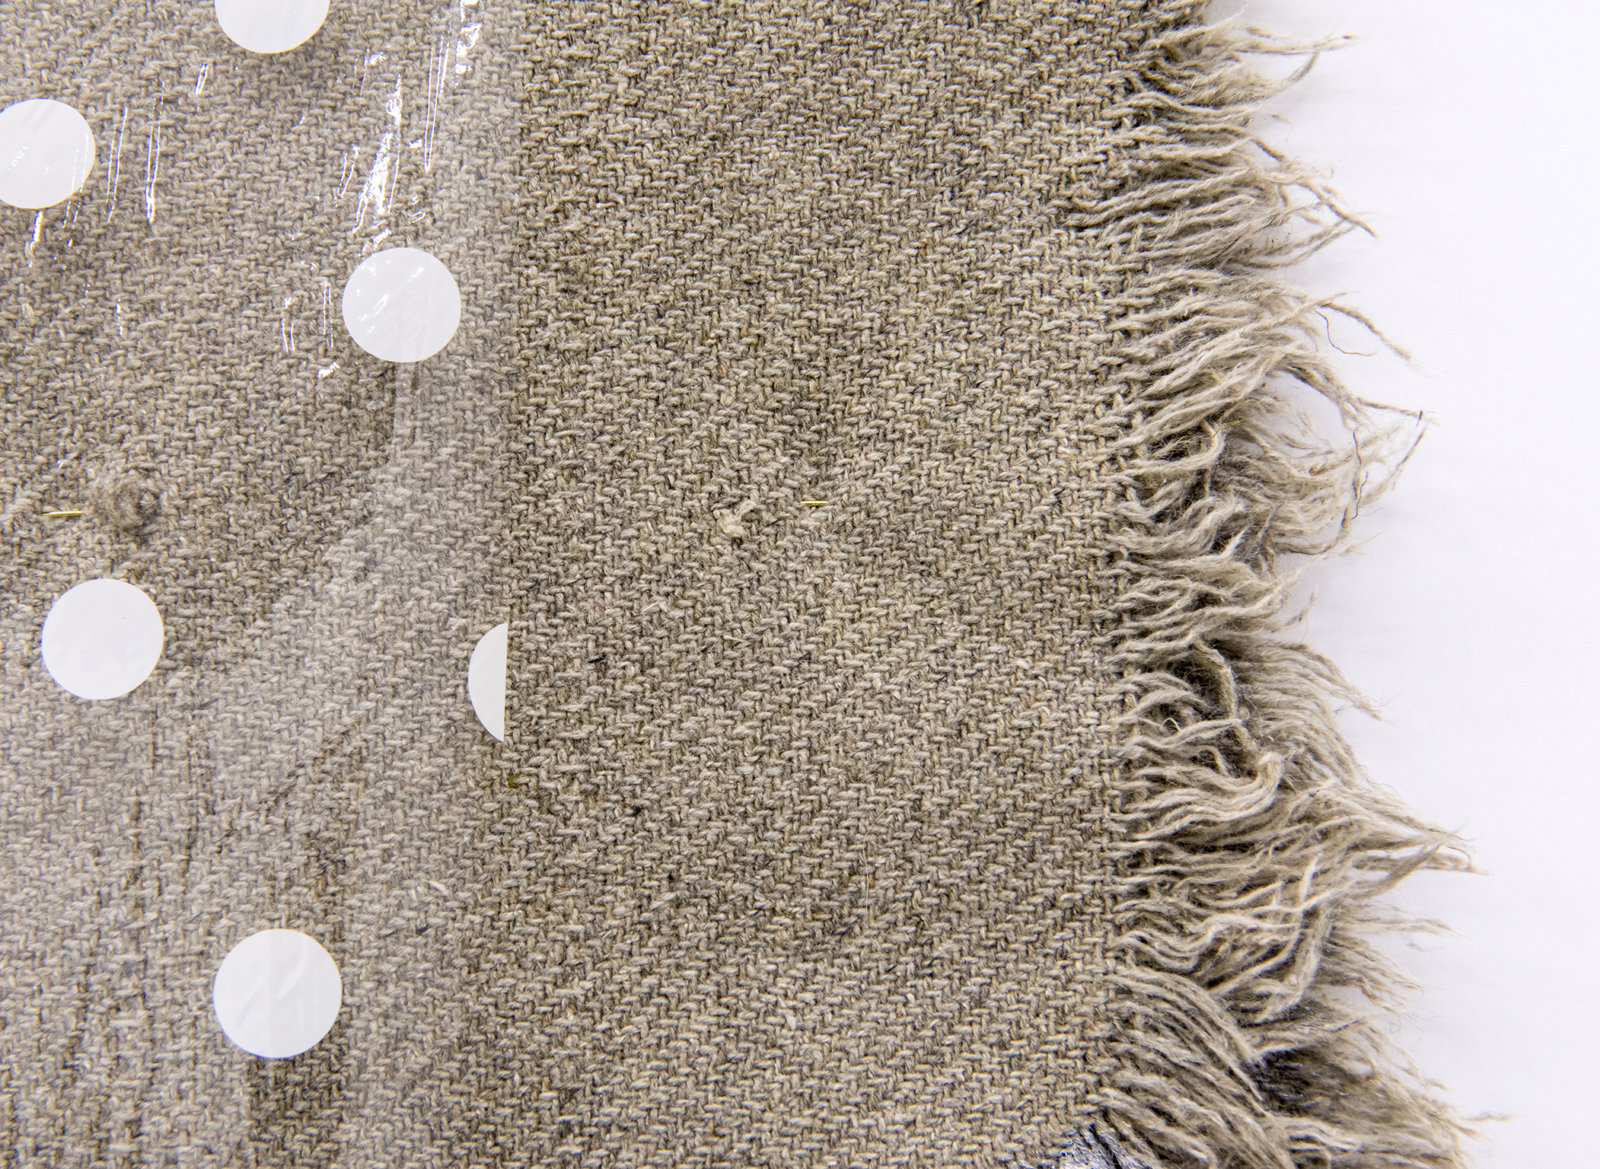 Liz Magor, Violator (detail), 2015, wool, fabric, plastic, paper, polymerized gypsum, 24 x 160 in. (61 x 406 cm)